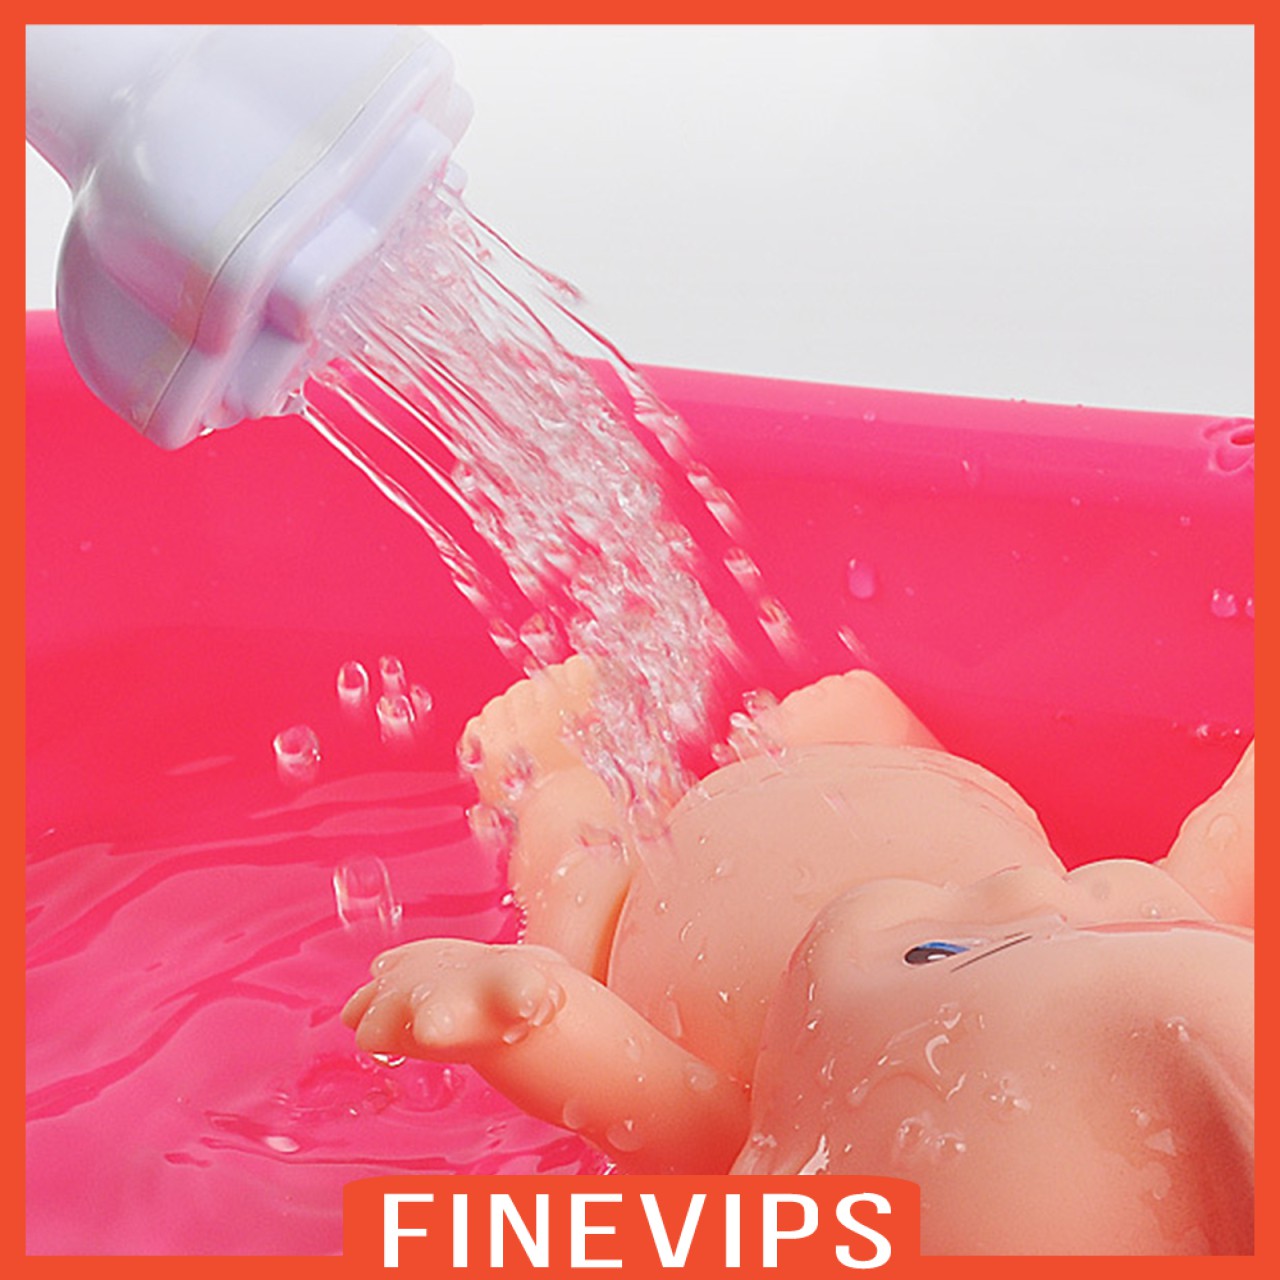 [FINEVIPS] Doll Bath Play Tub with Shower Pretend Play Infant Baby Kids Doll Toy Bathtub